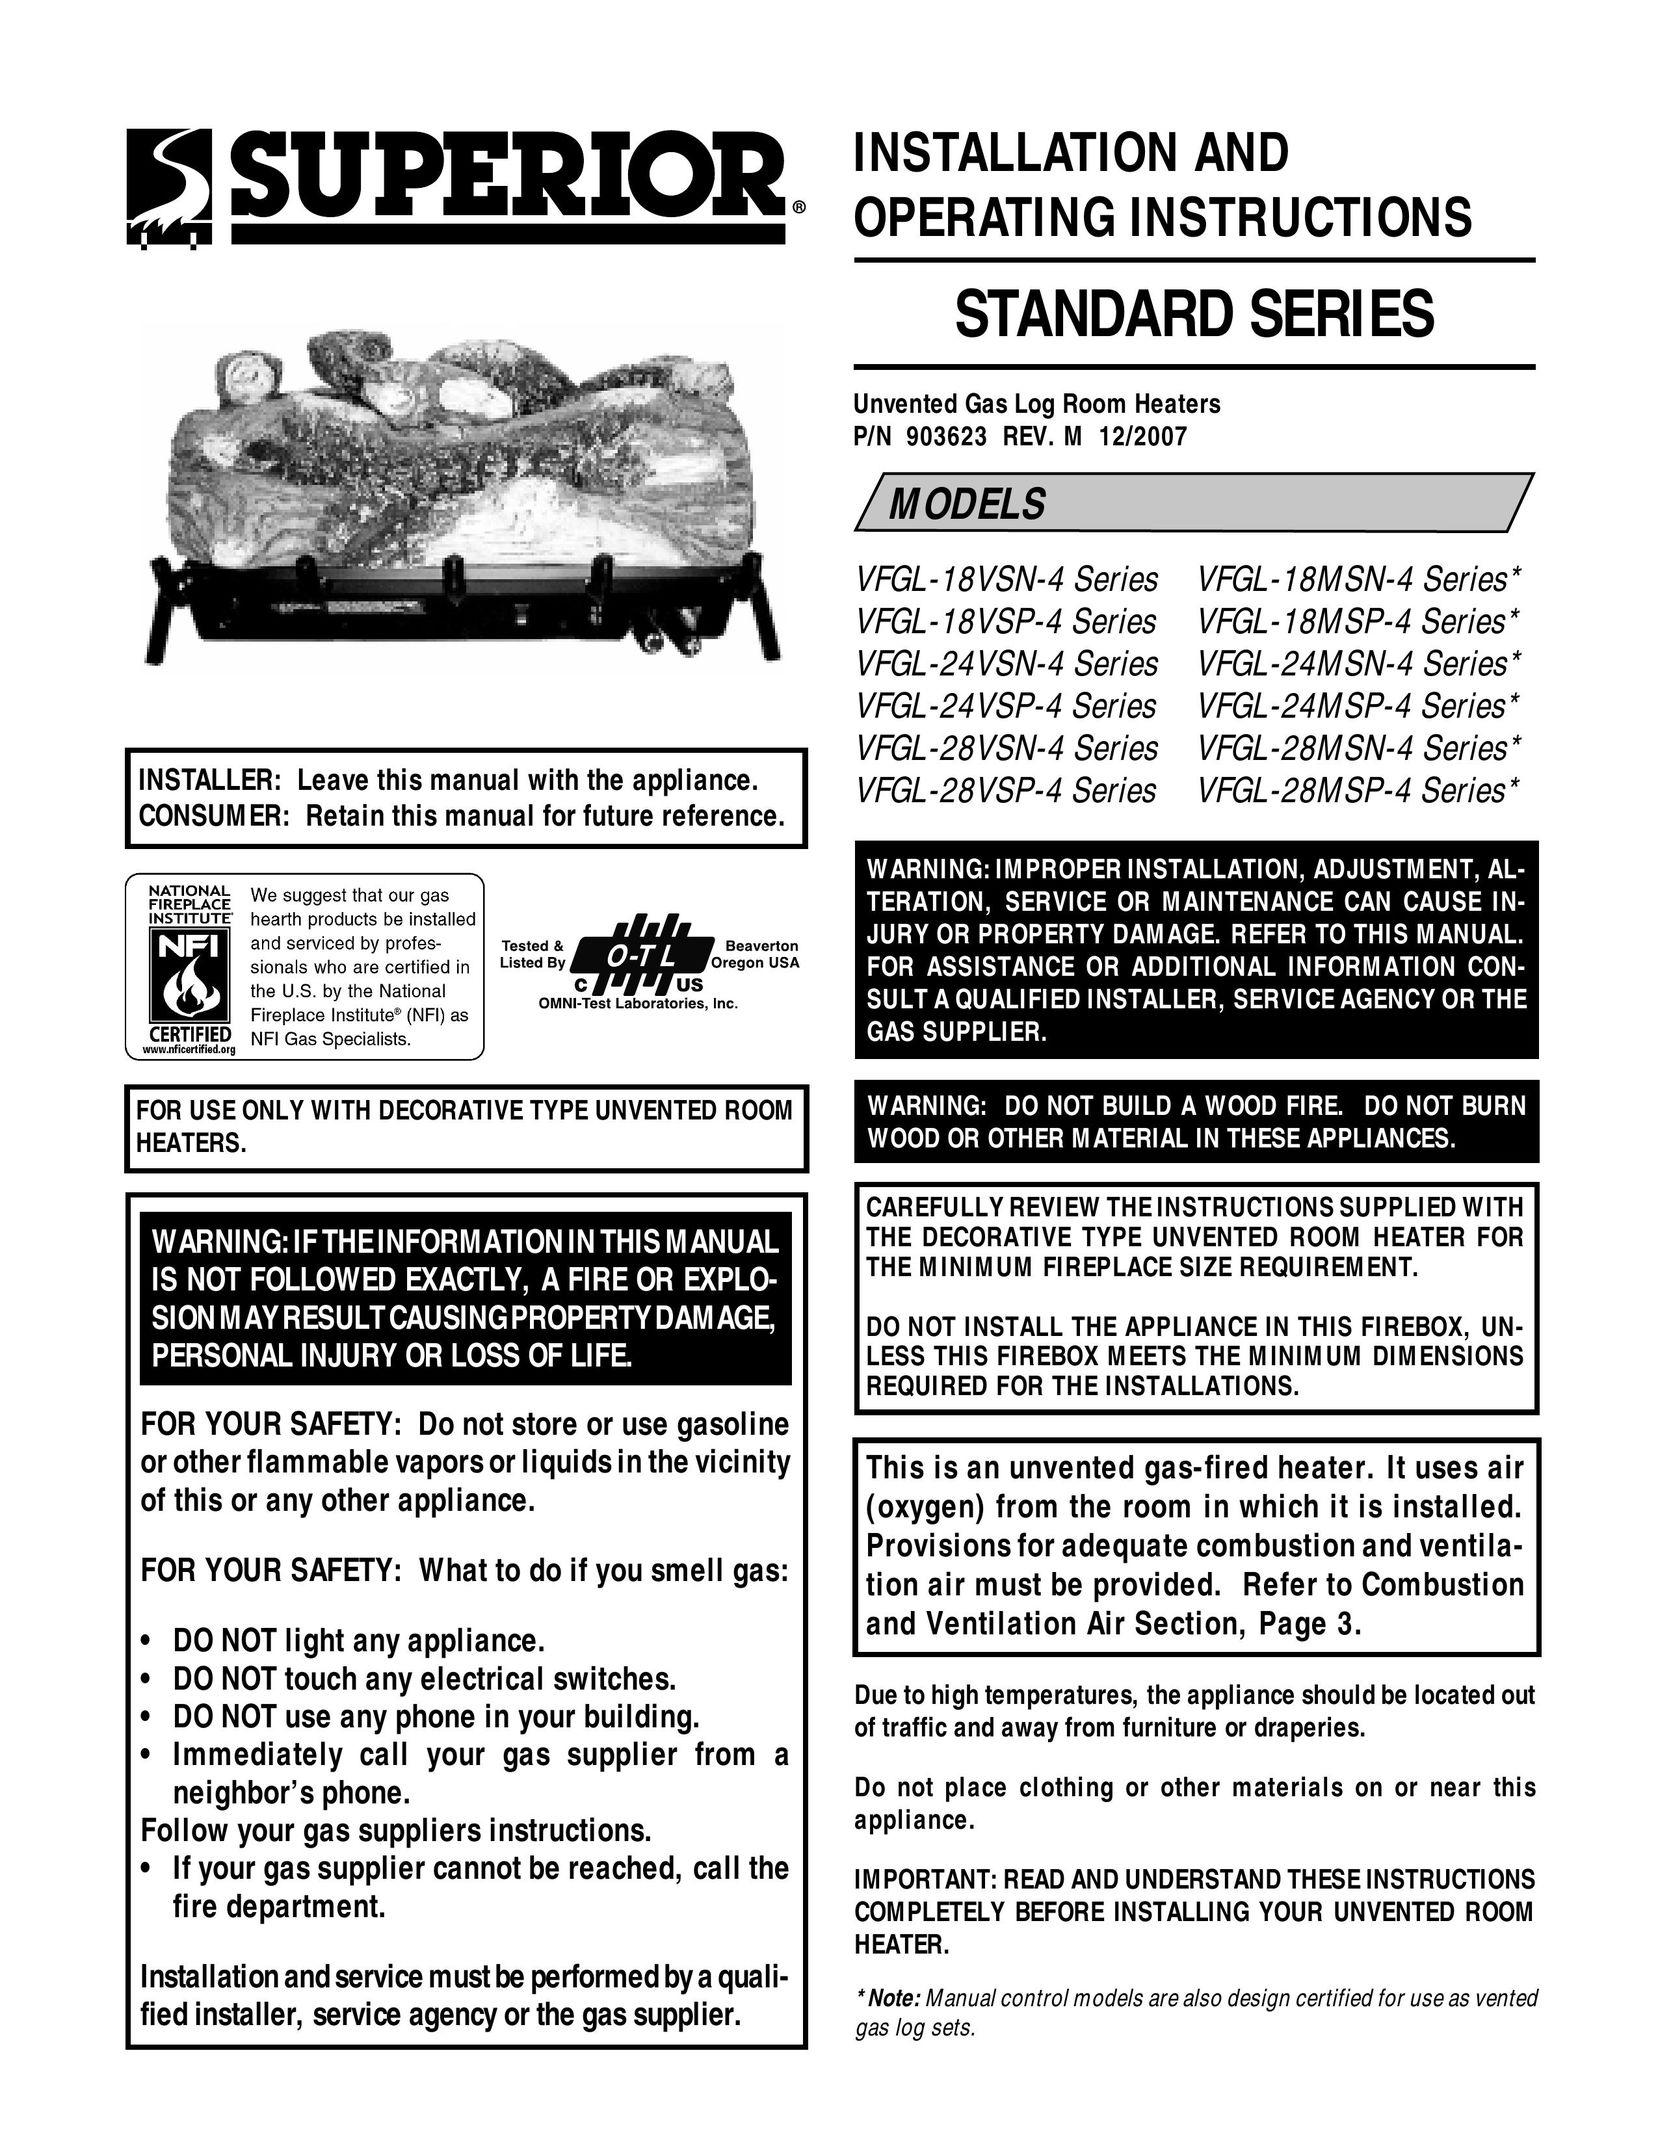 Superior VFGL-24MSN-4 SERIES* Gas Heater User Manual